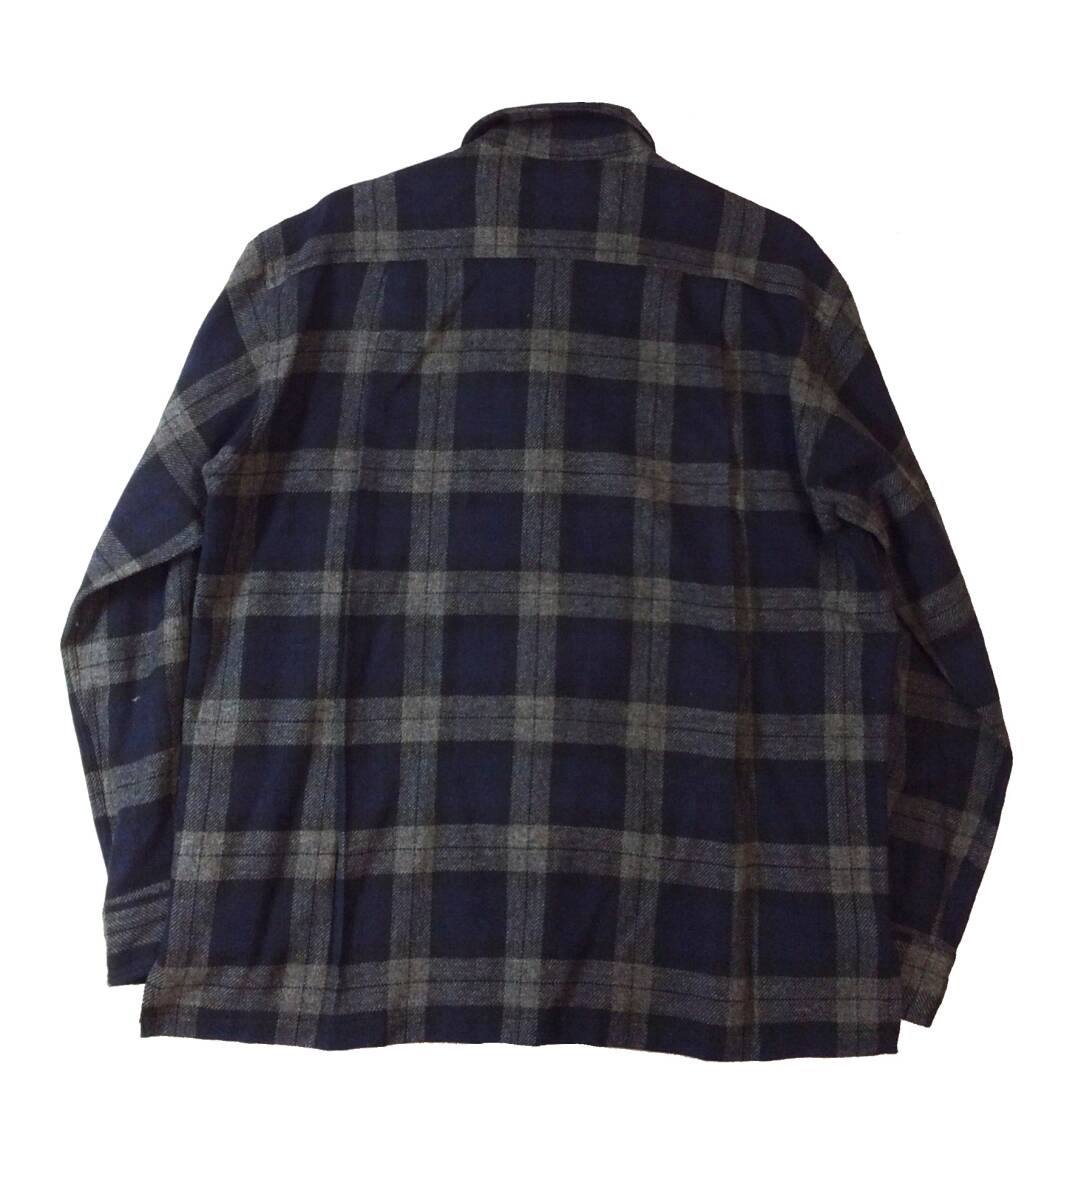 MARGARET HOWELL Margaret Howell wool shirt shirt jacket check ... button navy / gray series men's L